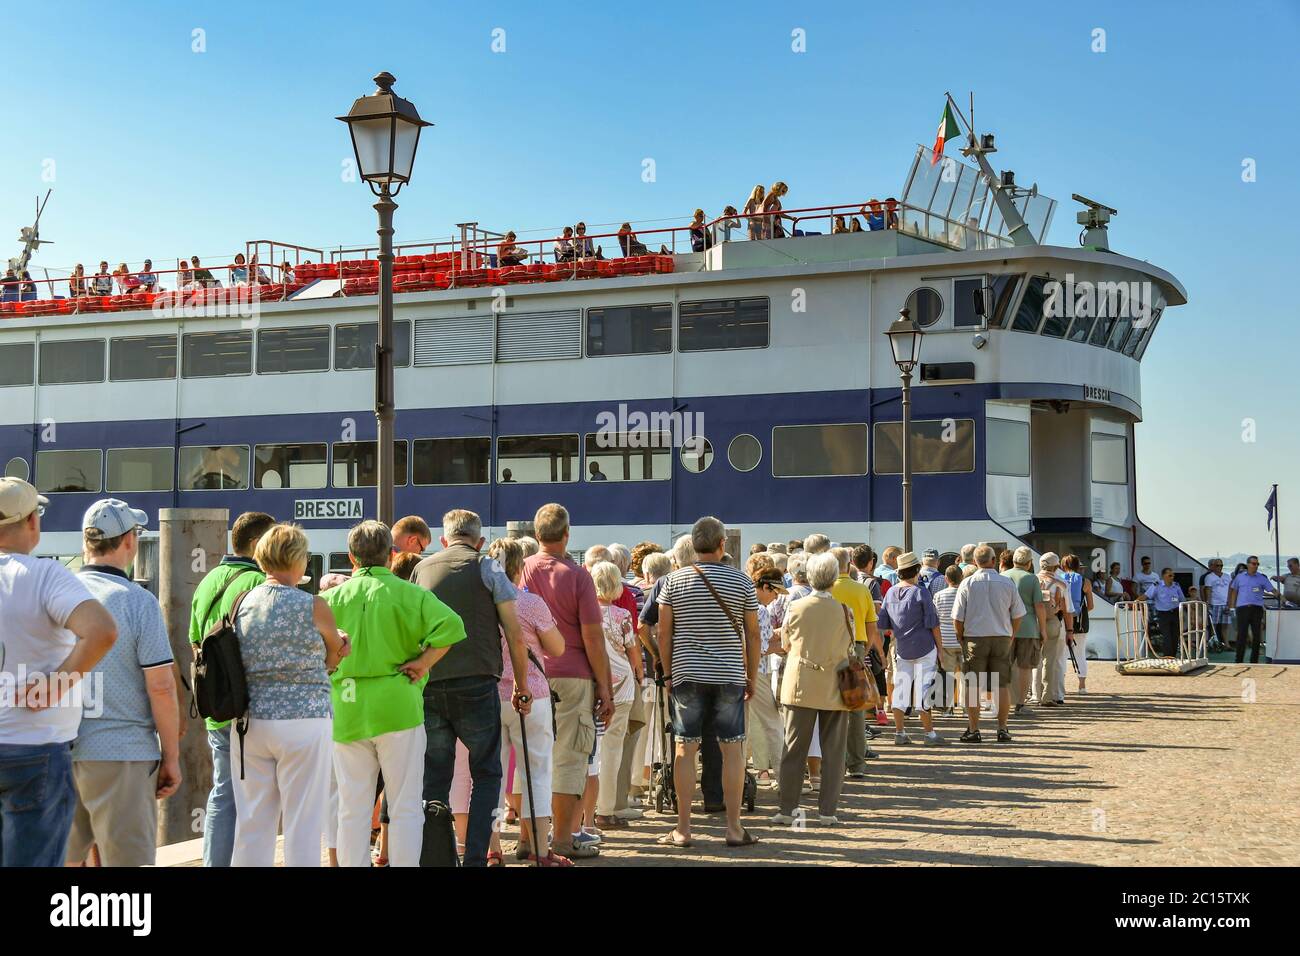 GARDA, ITALY - SEPTEMBER 2018: long queue of passengers waiting to board a large passenger ferry at Garda on Lake Garda. Stock Photo